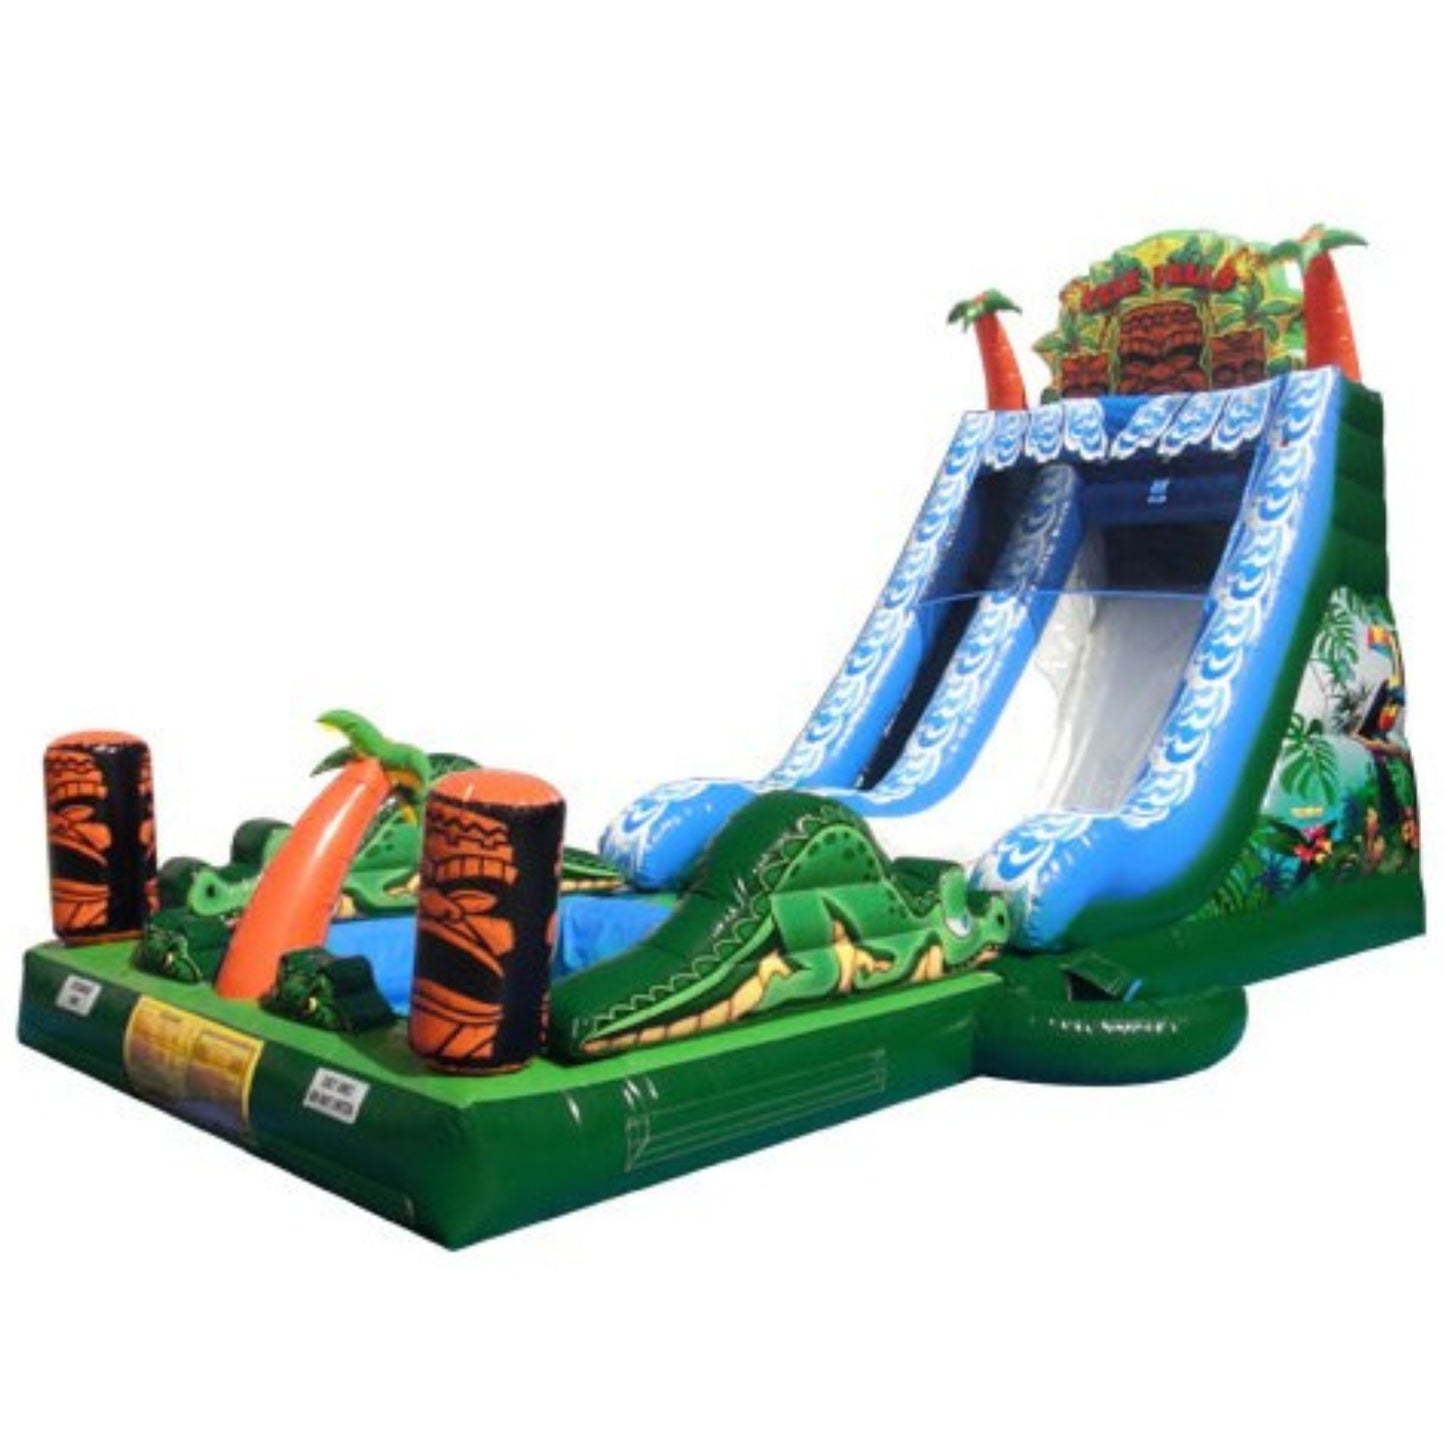 Tiki Falls 19' Slide with Detachable Pool & Blower by Ninja Jump